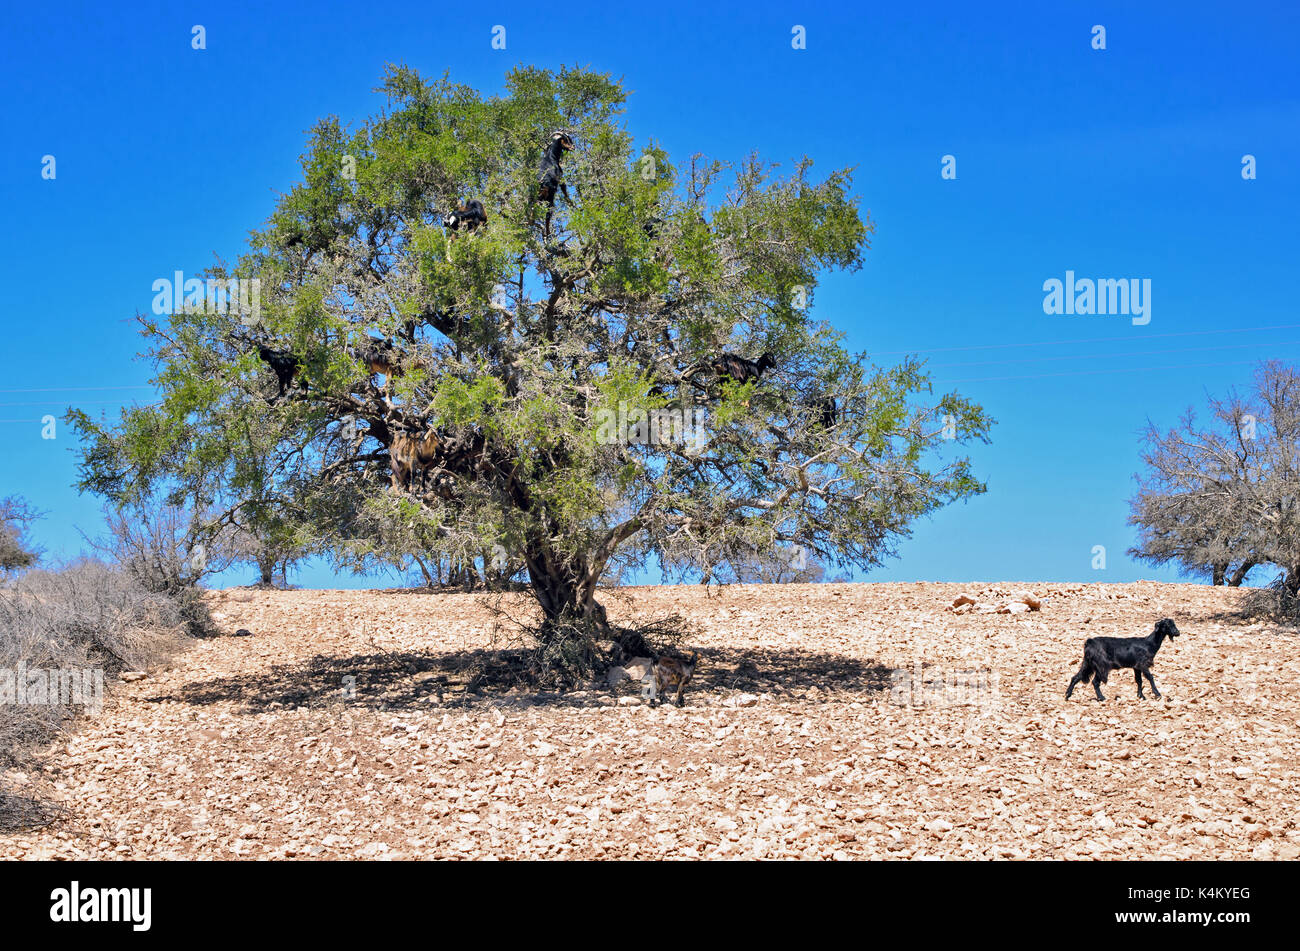 A goats on a tree Stock Photo